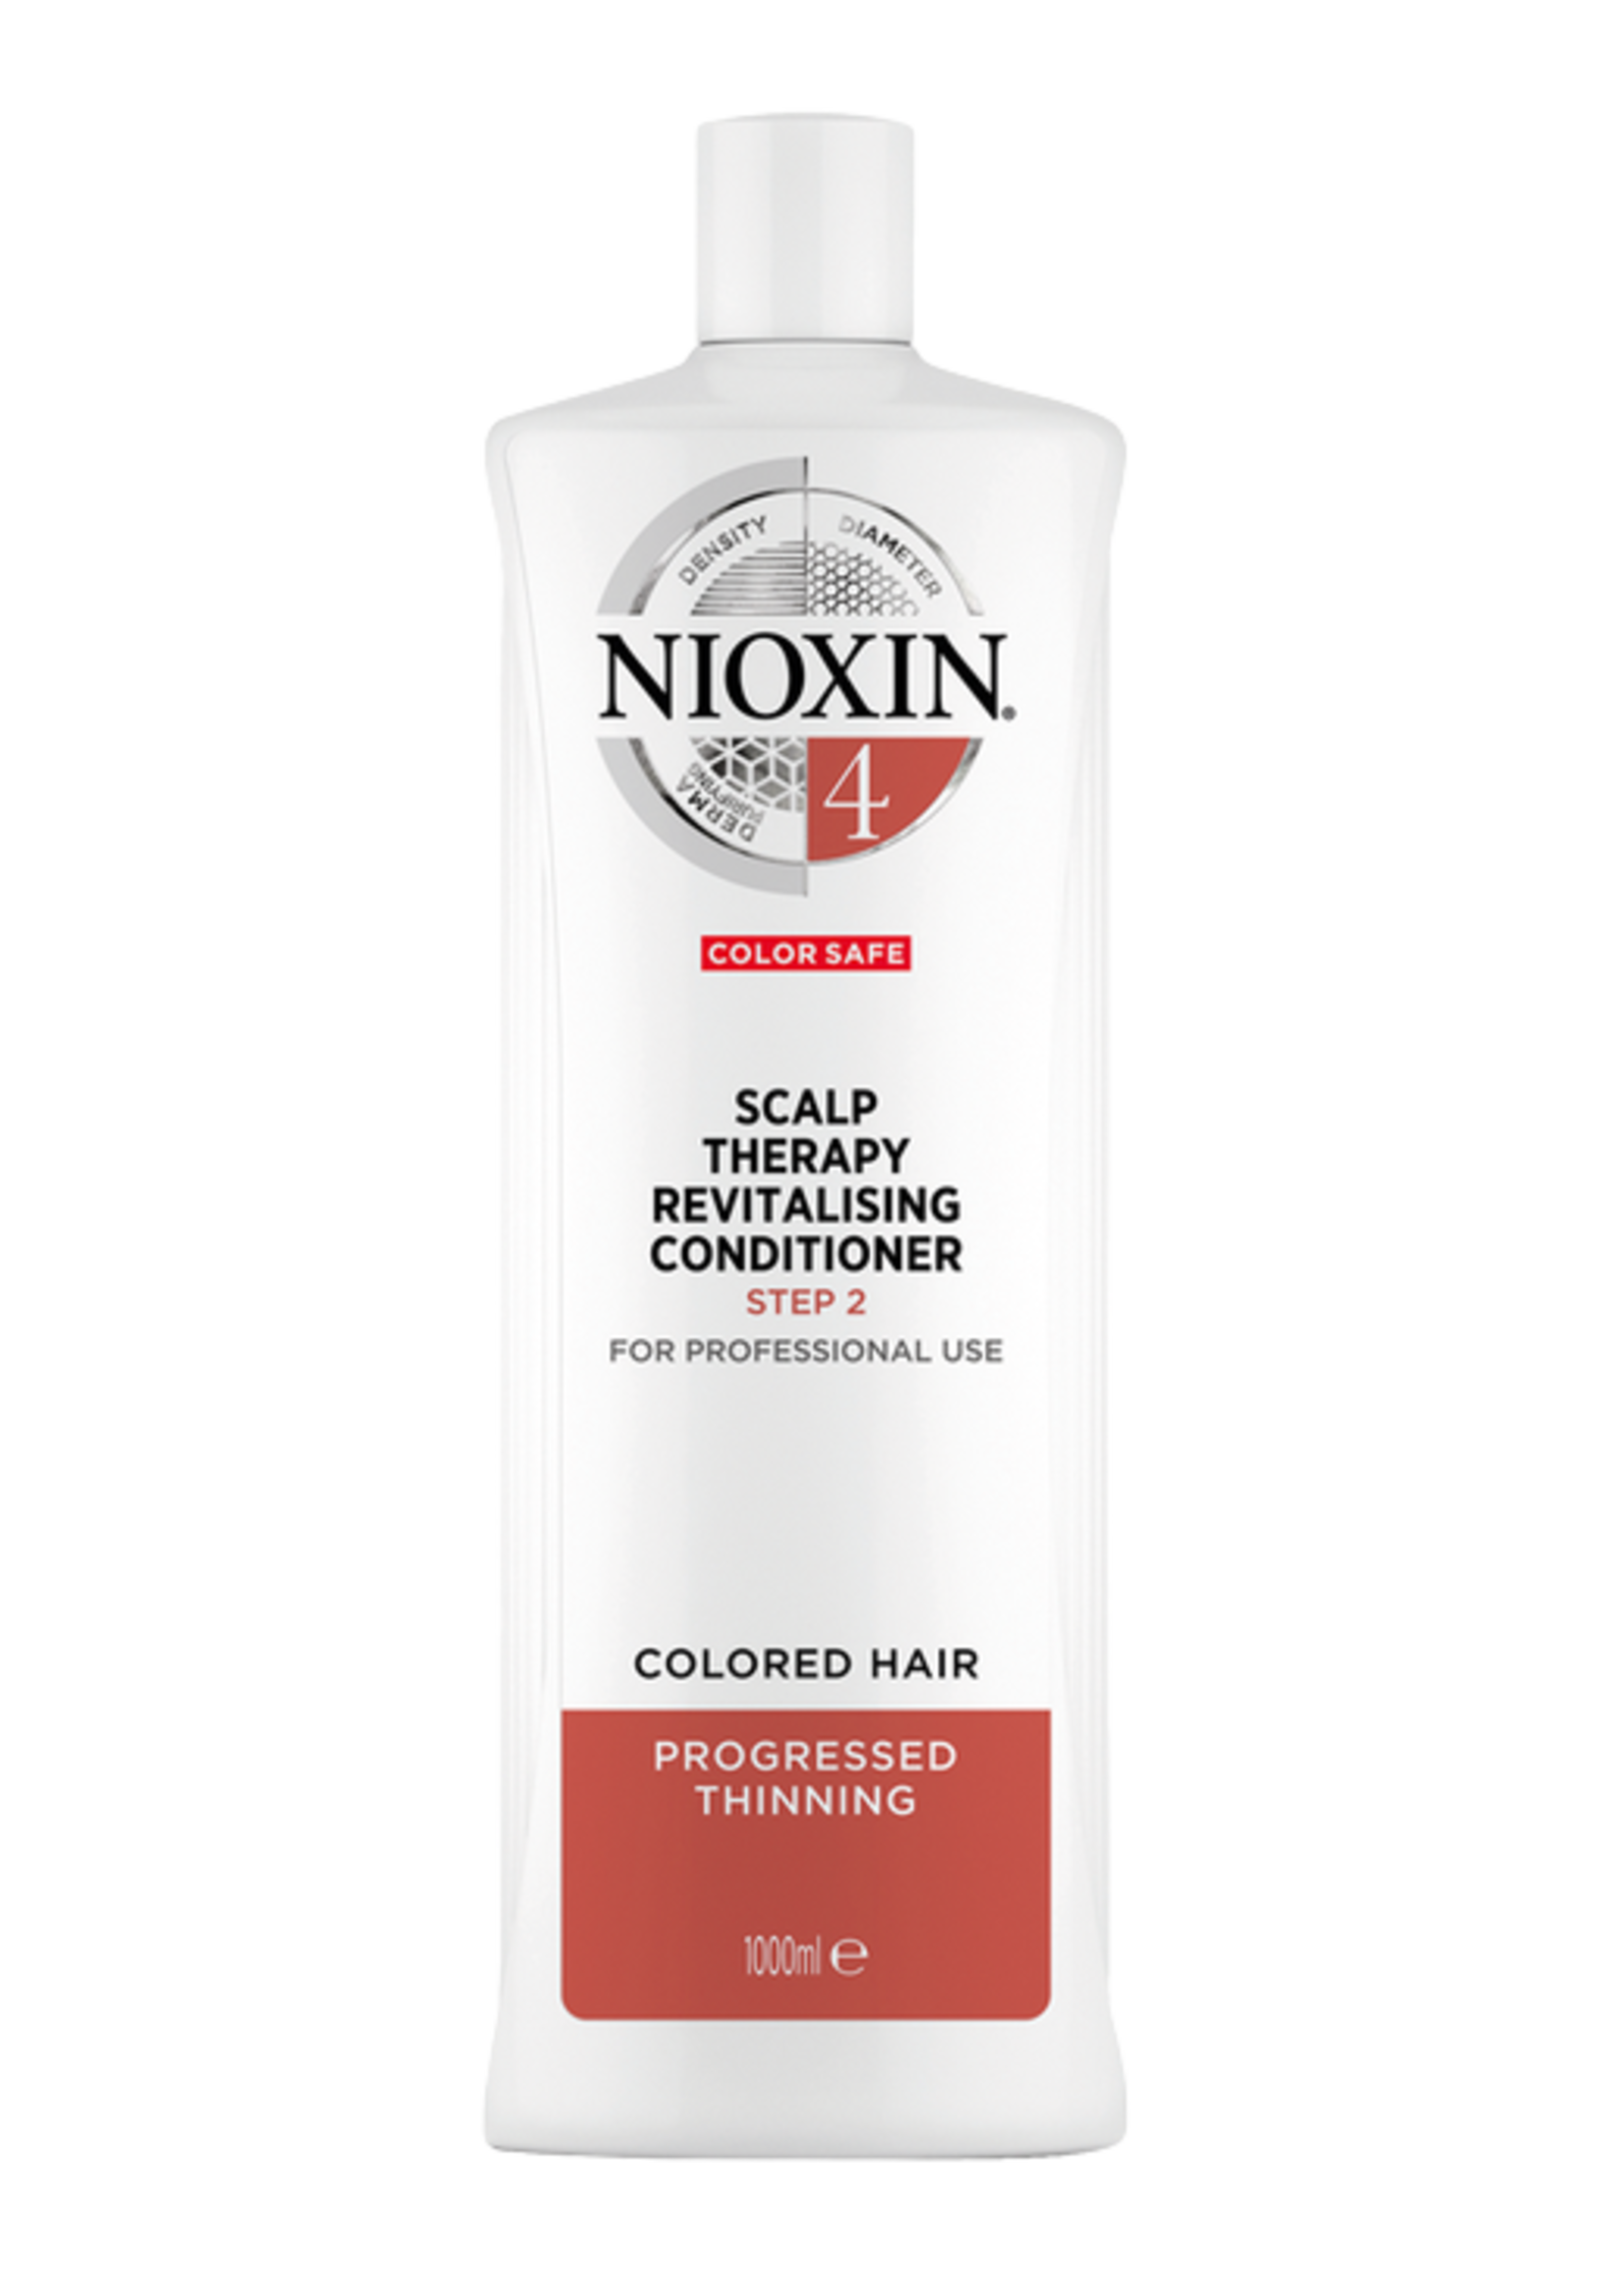 Nioxin Nioxin System 4 Scalp Therapy Revitalizing Conditioner 1L